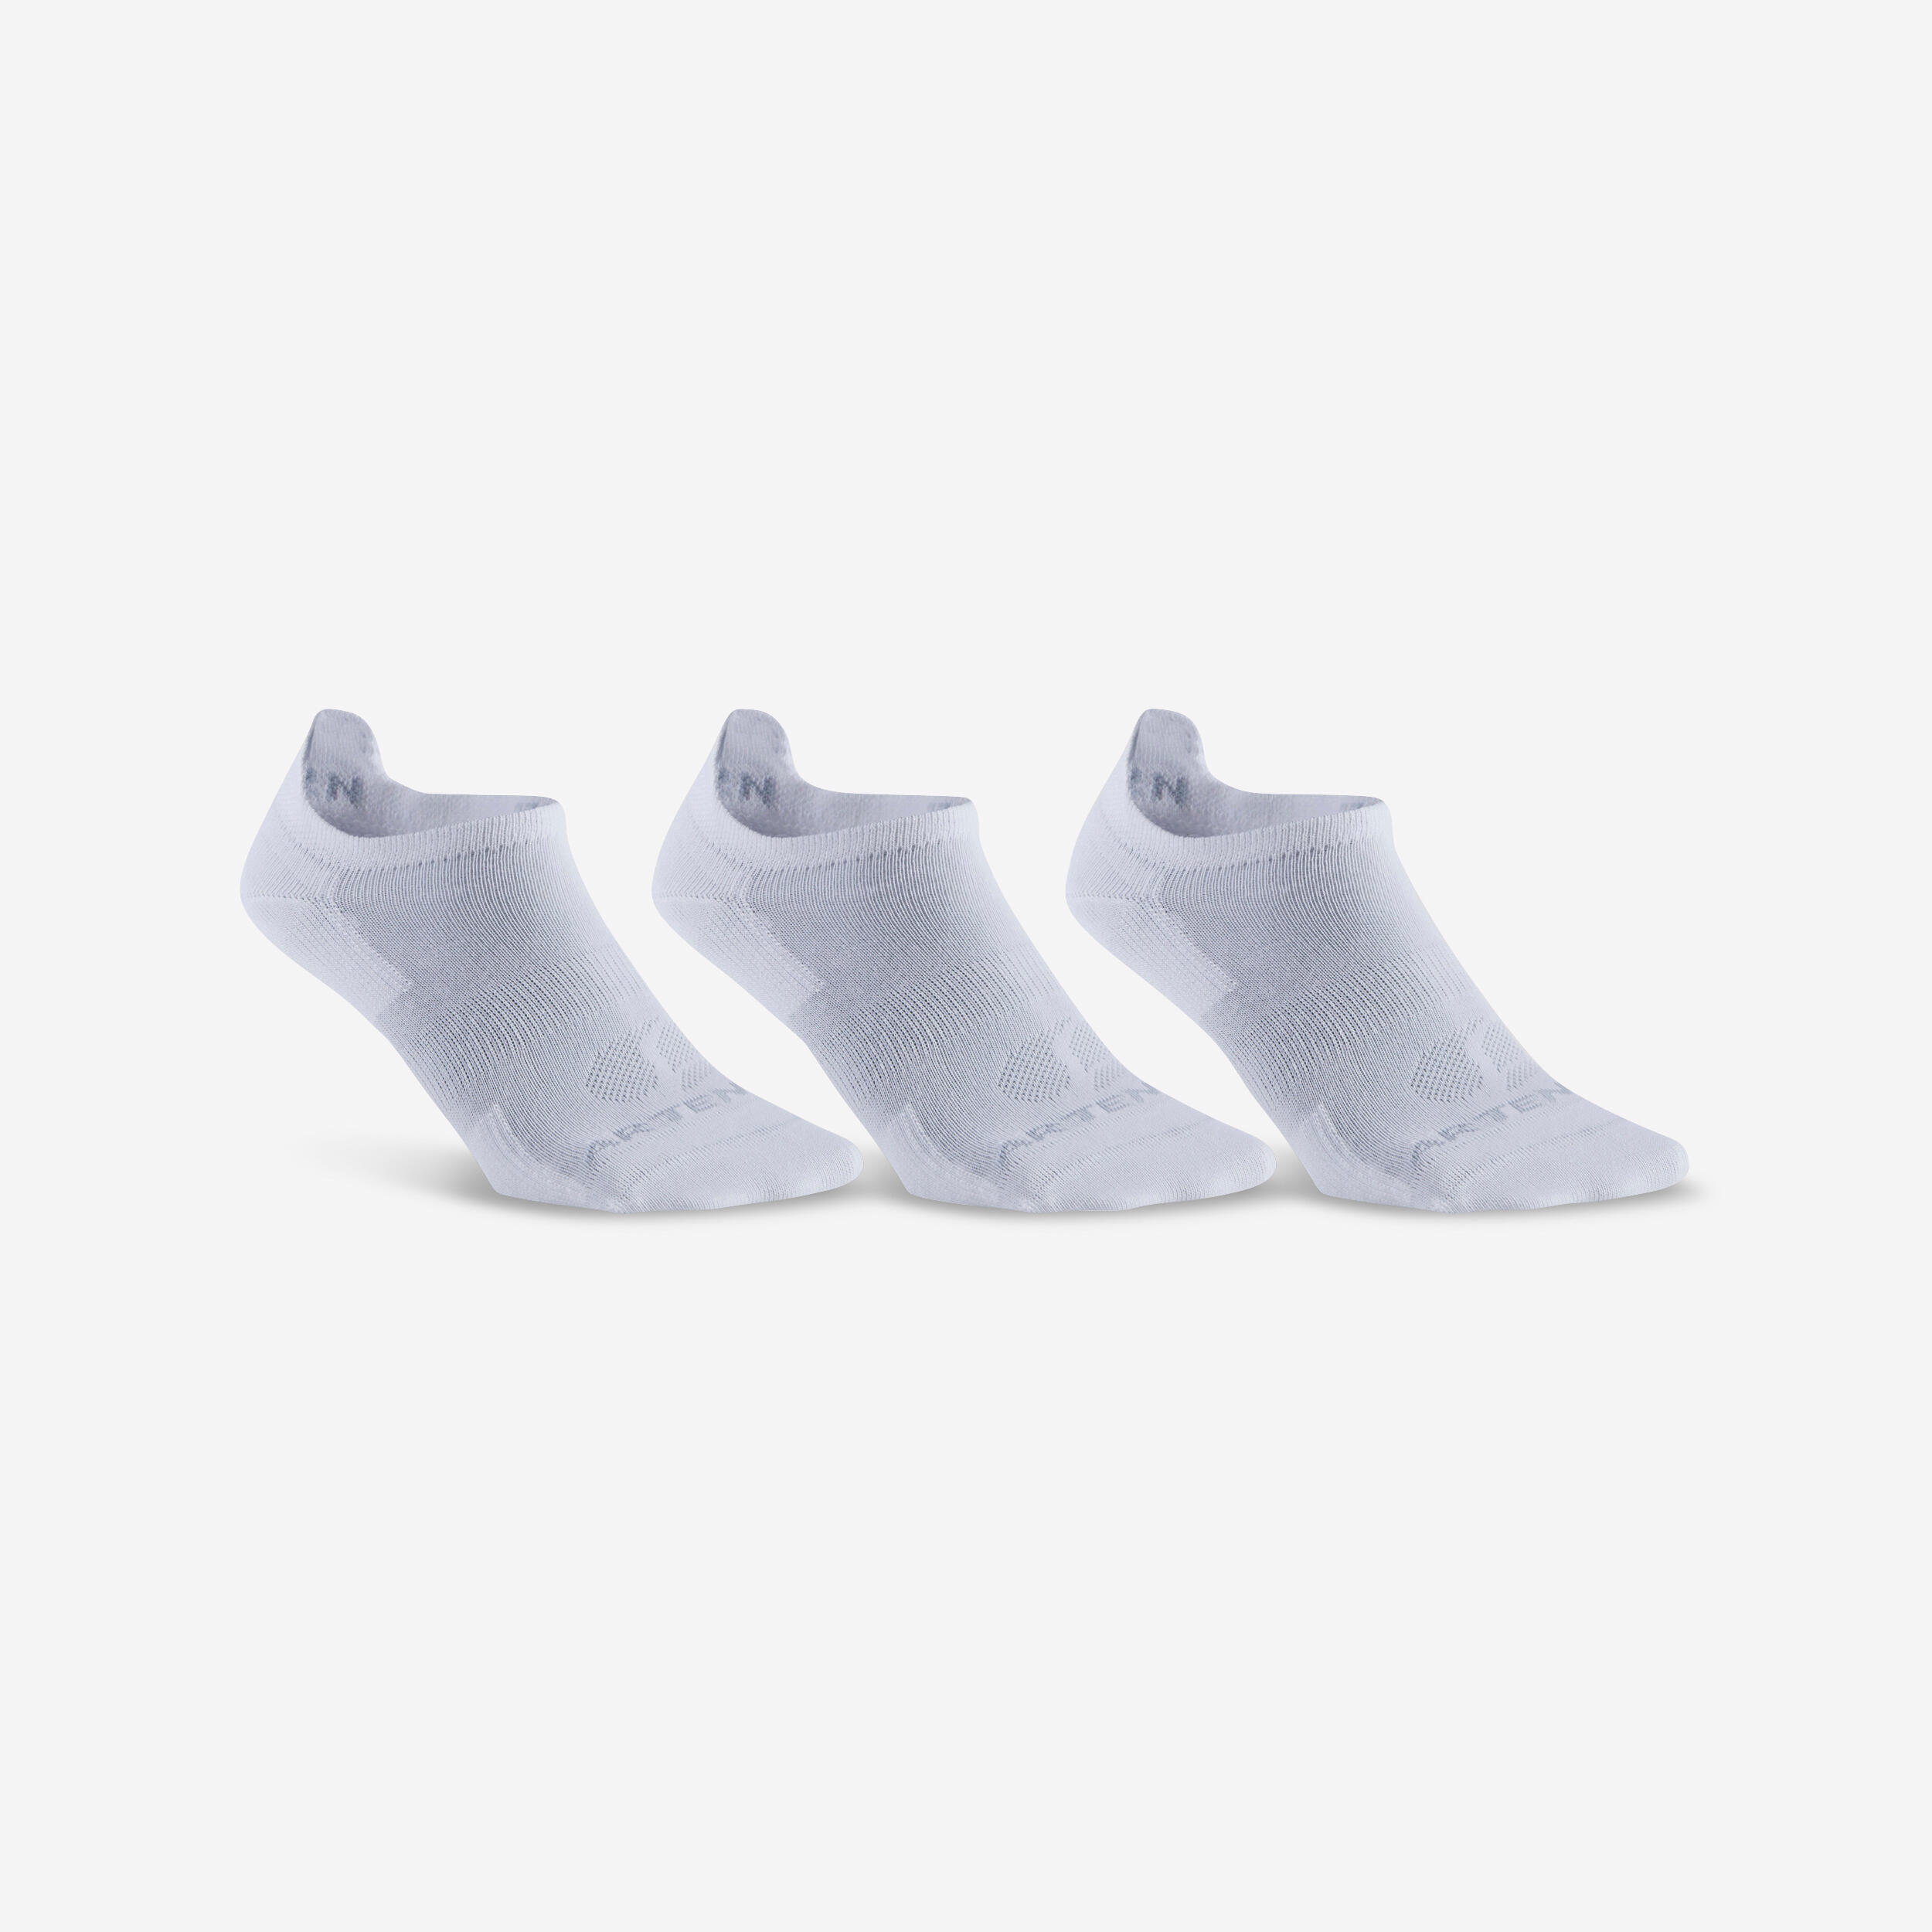 ARTENGO RS 160 Low Sports Socks Tri-Pack - White